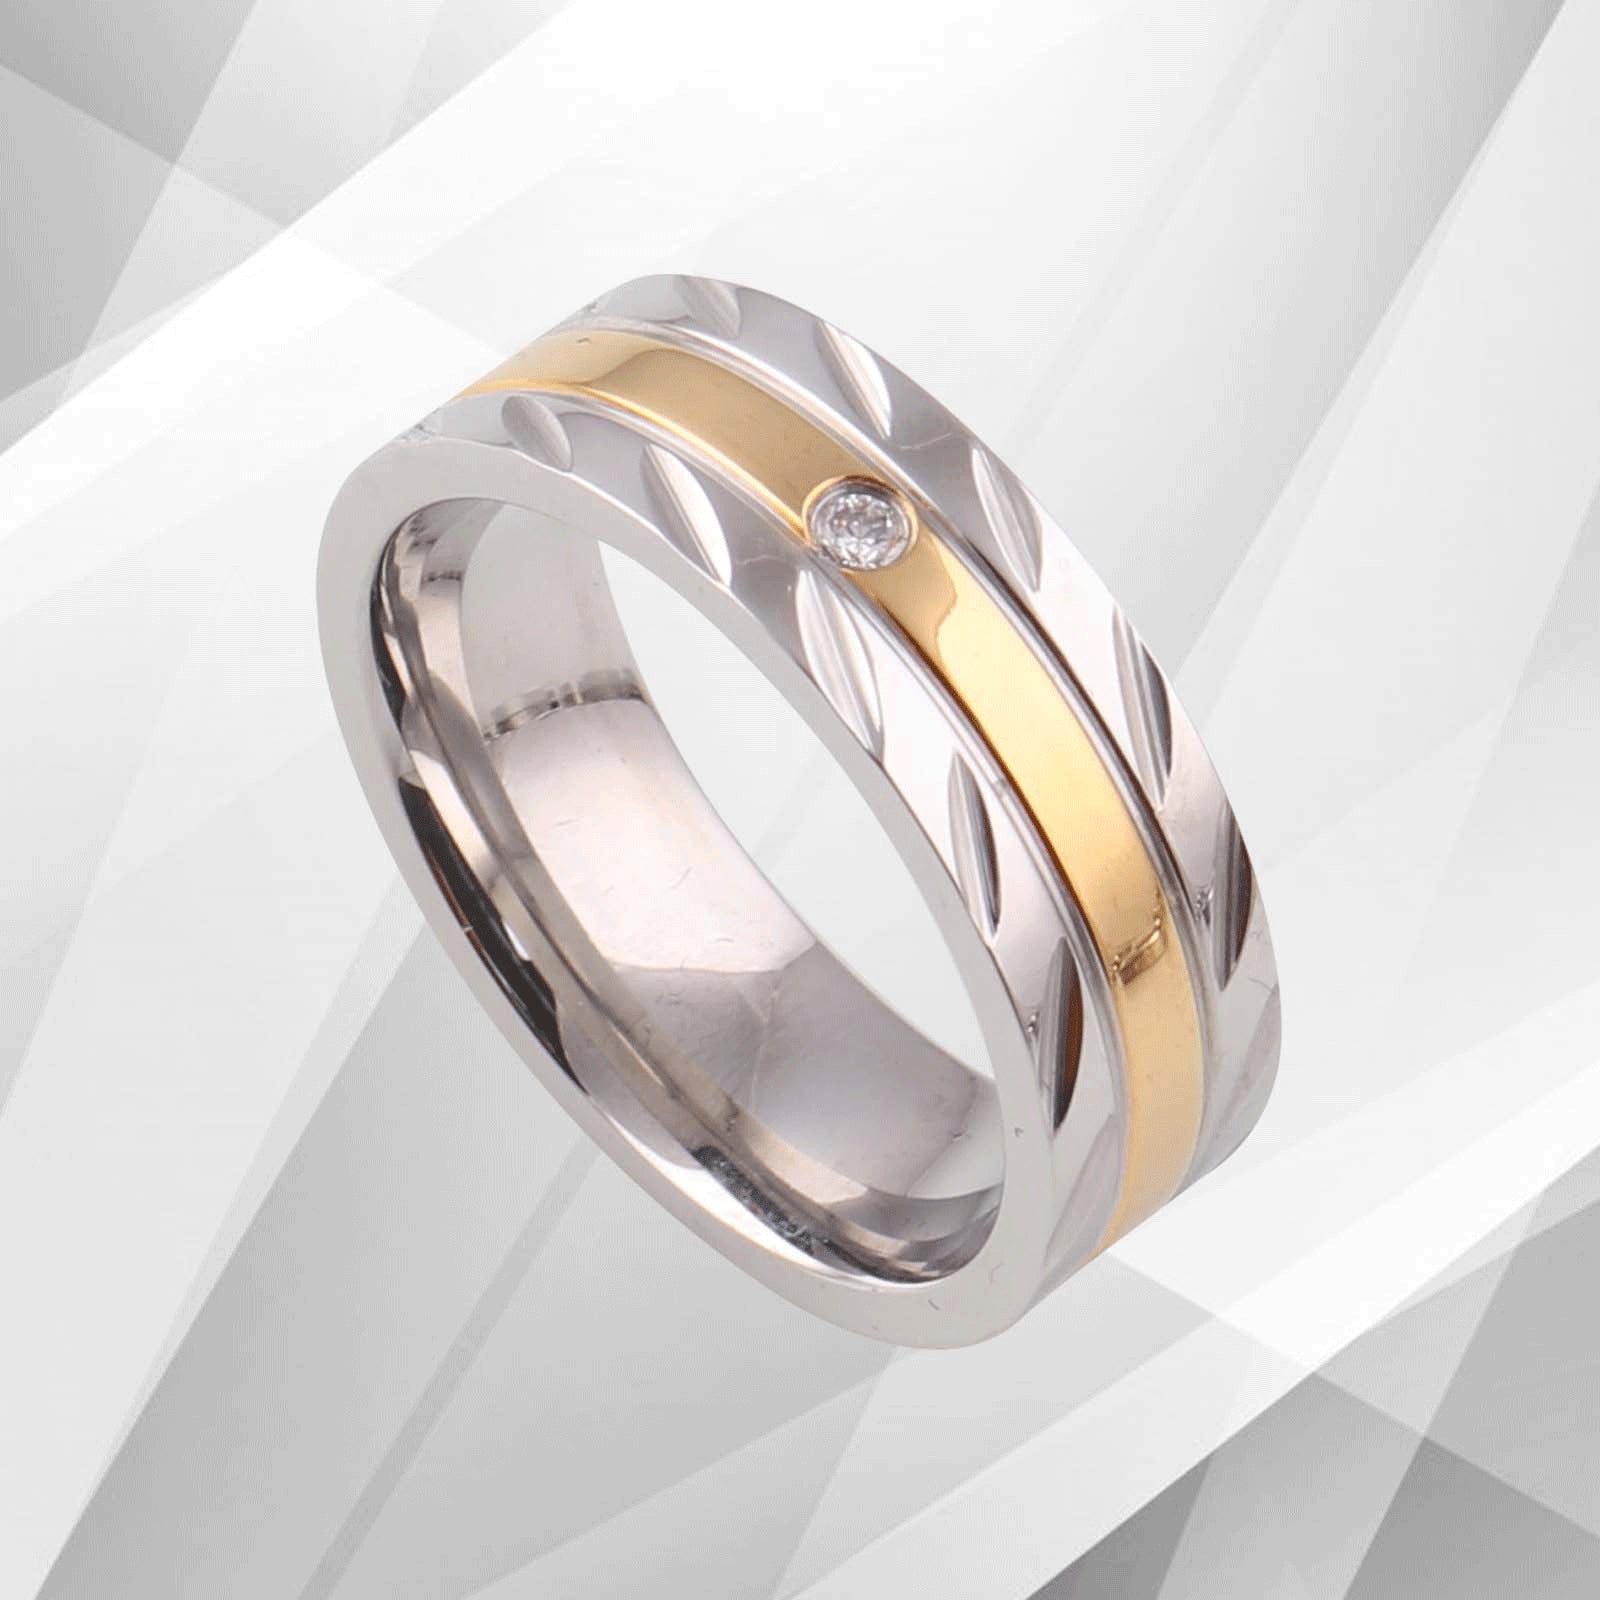 Designer Titanium CZ Diamond Wedding Band Ring - 7mm Wide, 18Ct Yellow & White Gold Finish, Comfort Fit - Women's Engagement, Anniversary Gift (NDFL6A) Bijou Her